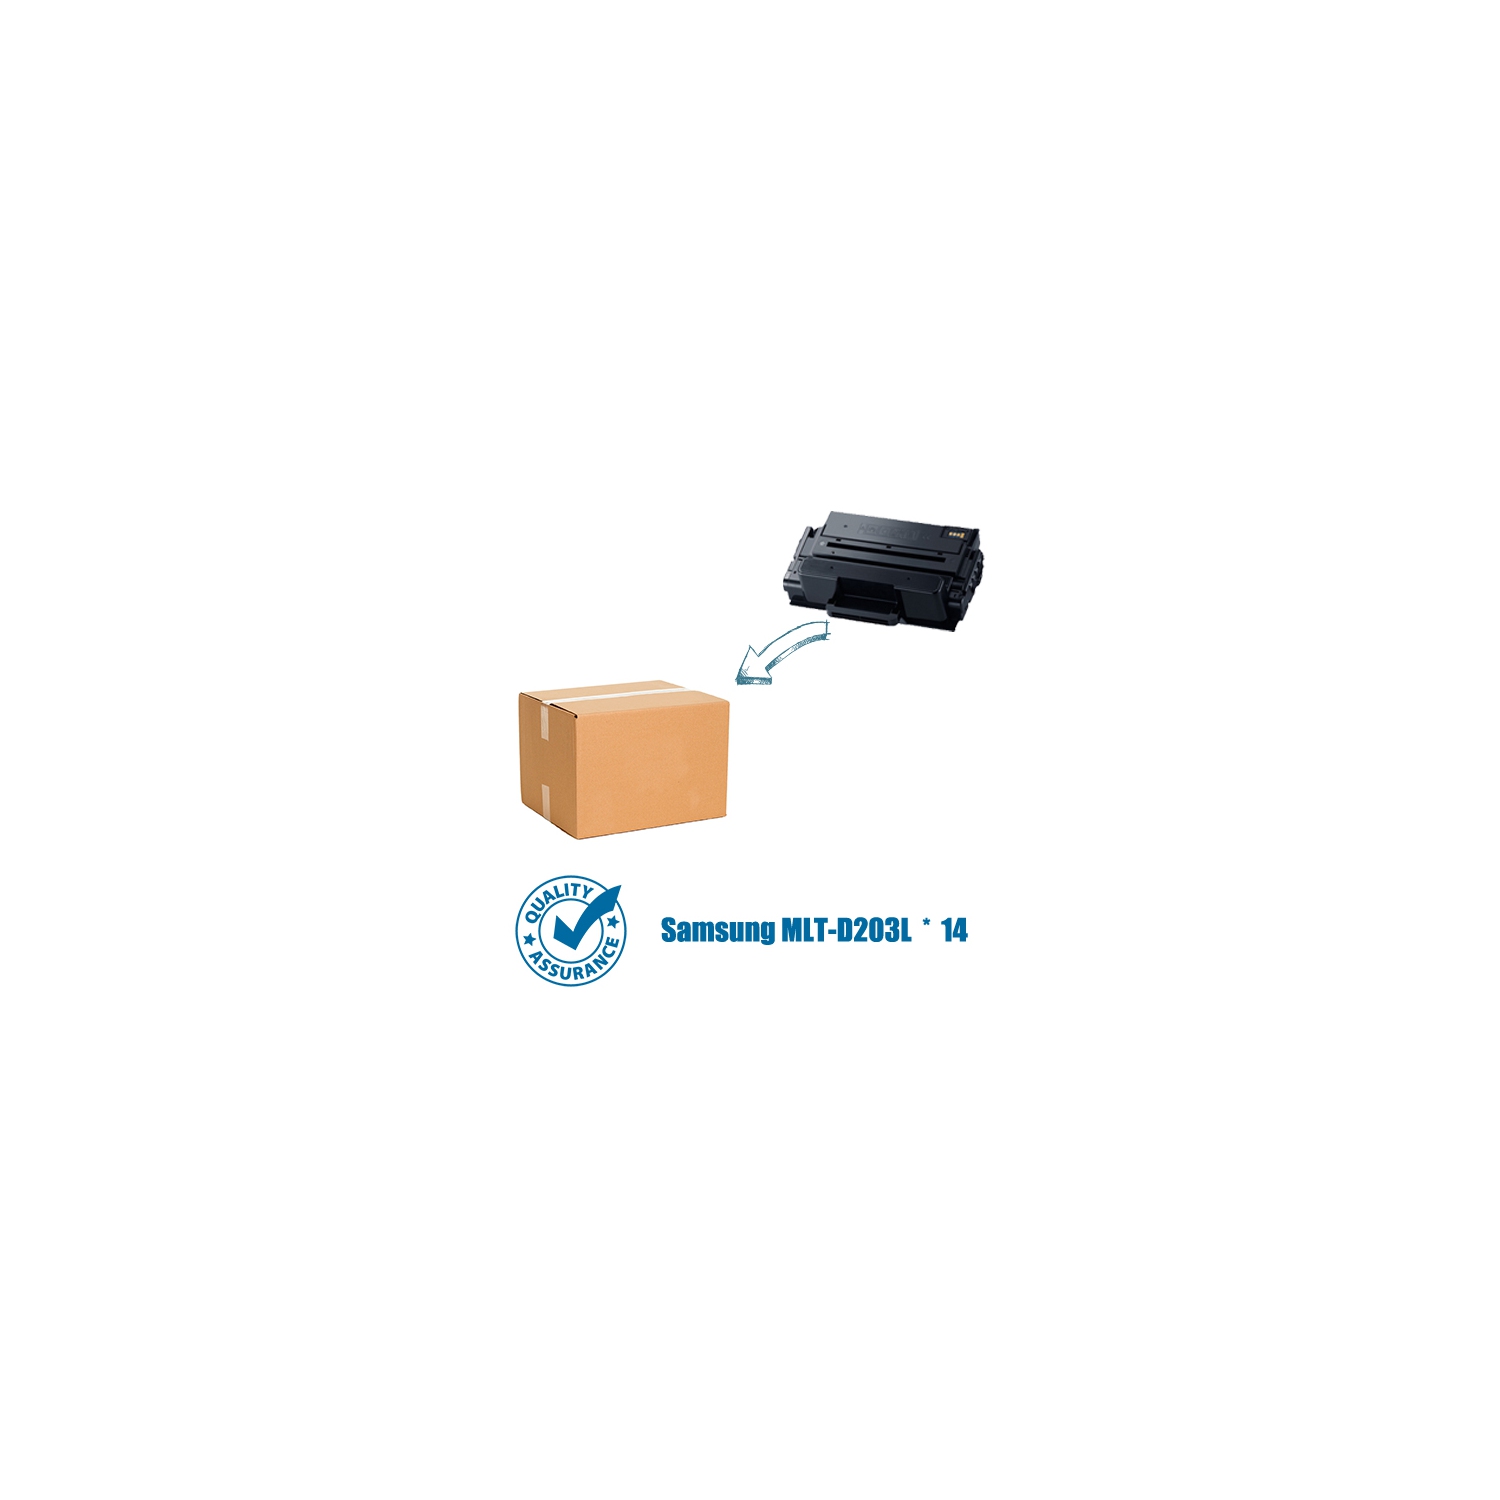 Printer Pro™ 14 Pack Samsung MLT-D203L (D203/MLTD203/mlt-d203) Compatible Black Toner Cartridge-Samsung Printer Xpress SL-M3320/3820/4020/M3370/3870/4070